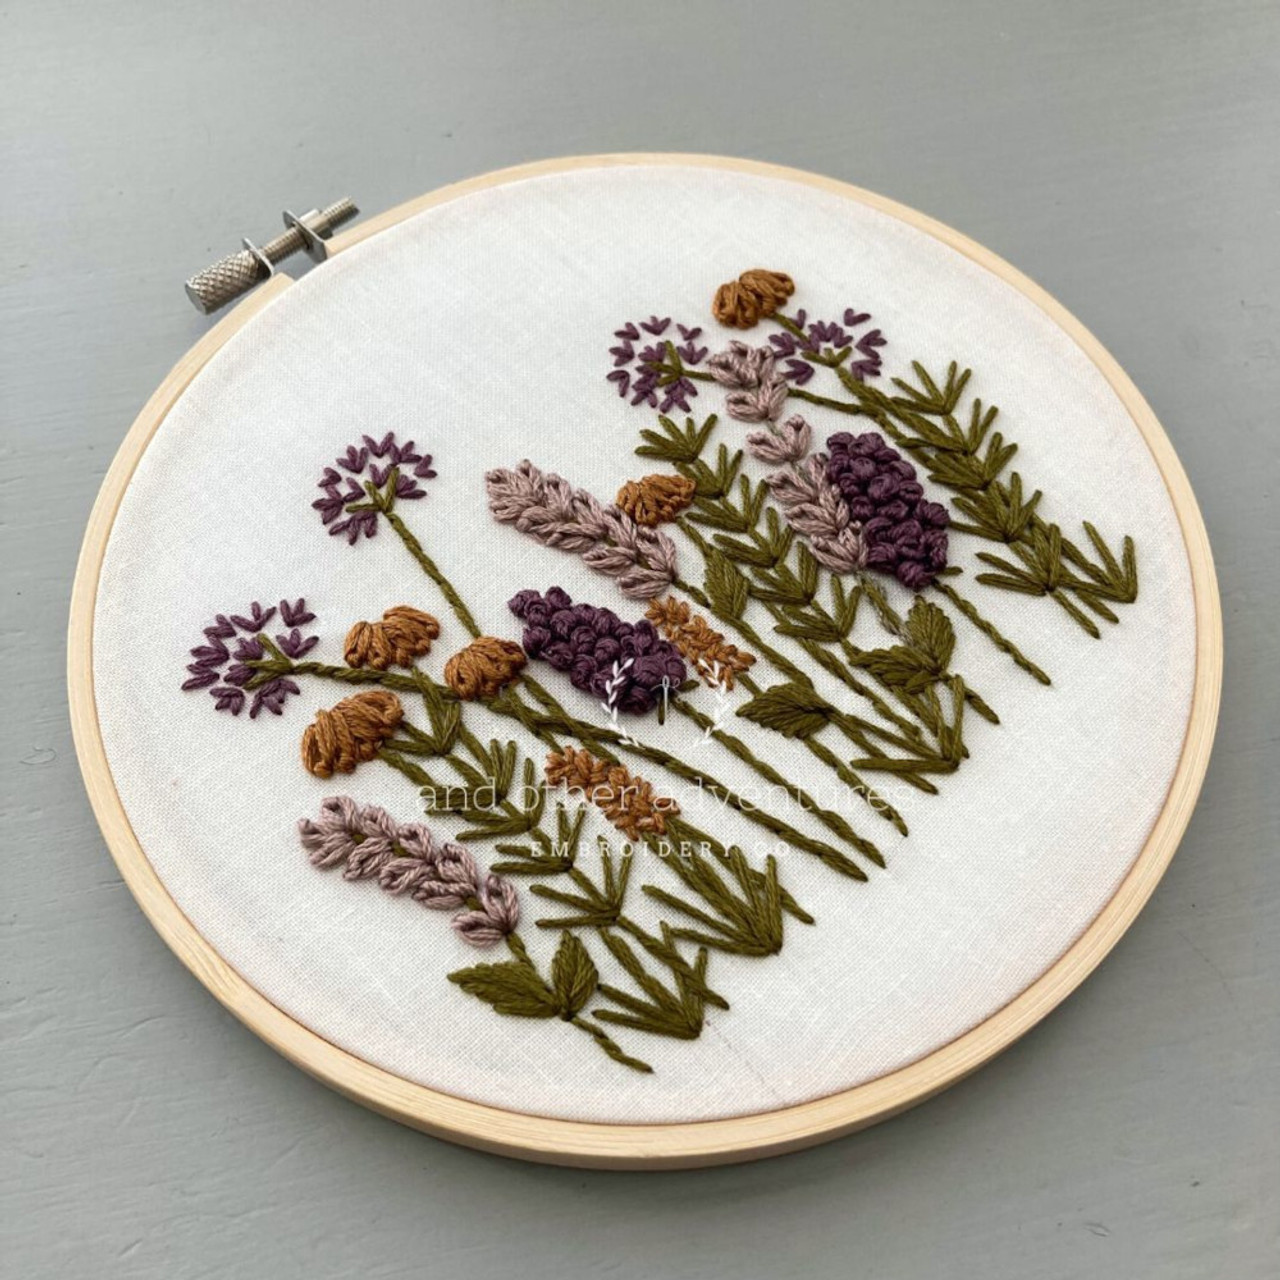 Embroidery Kit - Avonlea in Spice - Olivia's Flower Truck